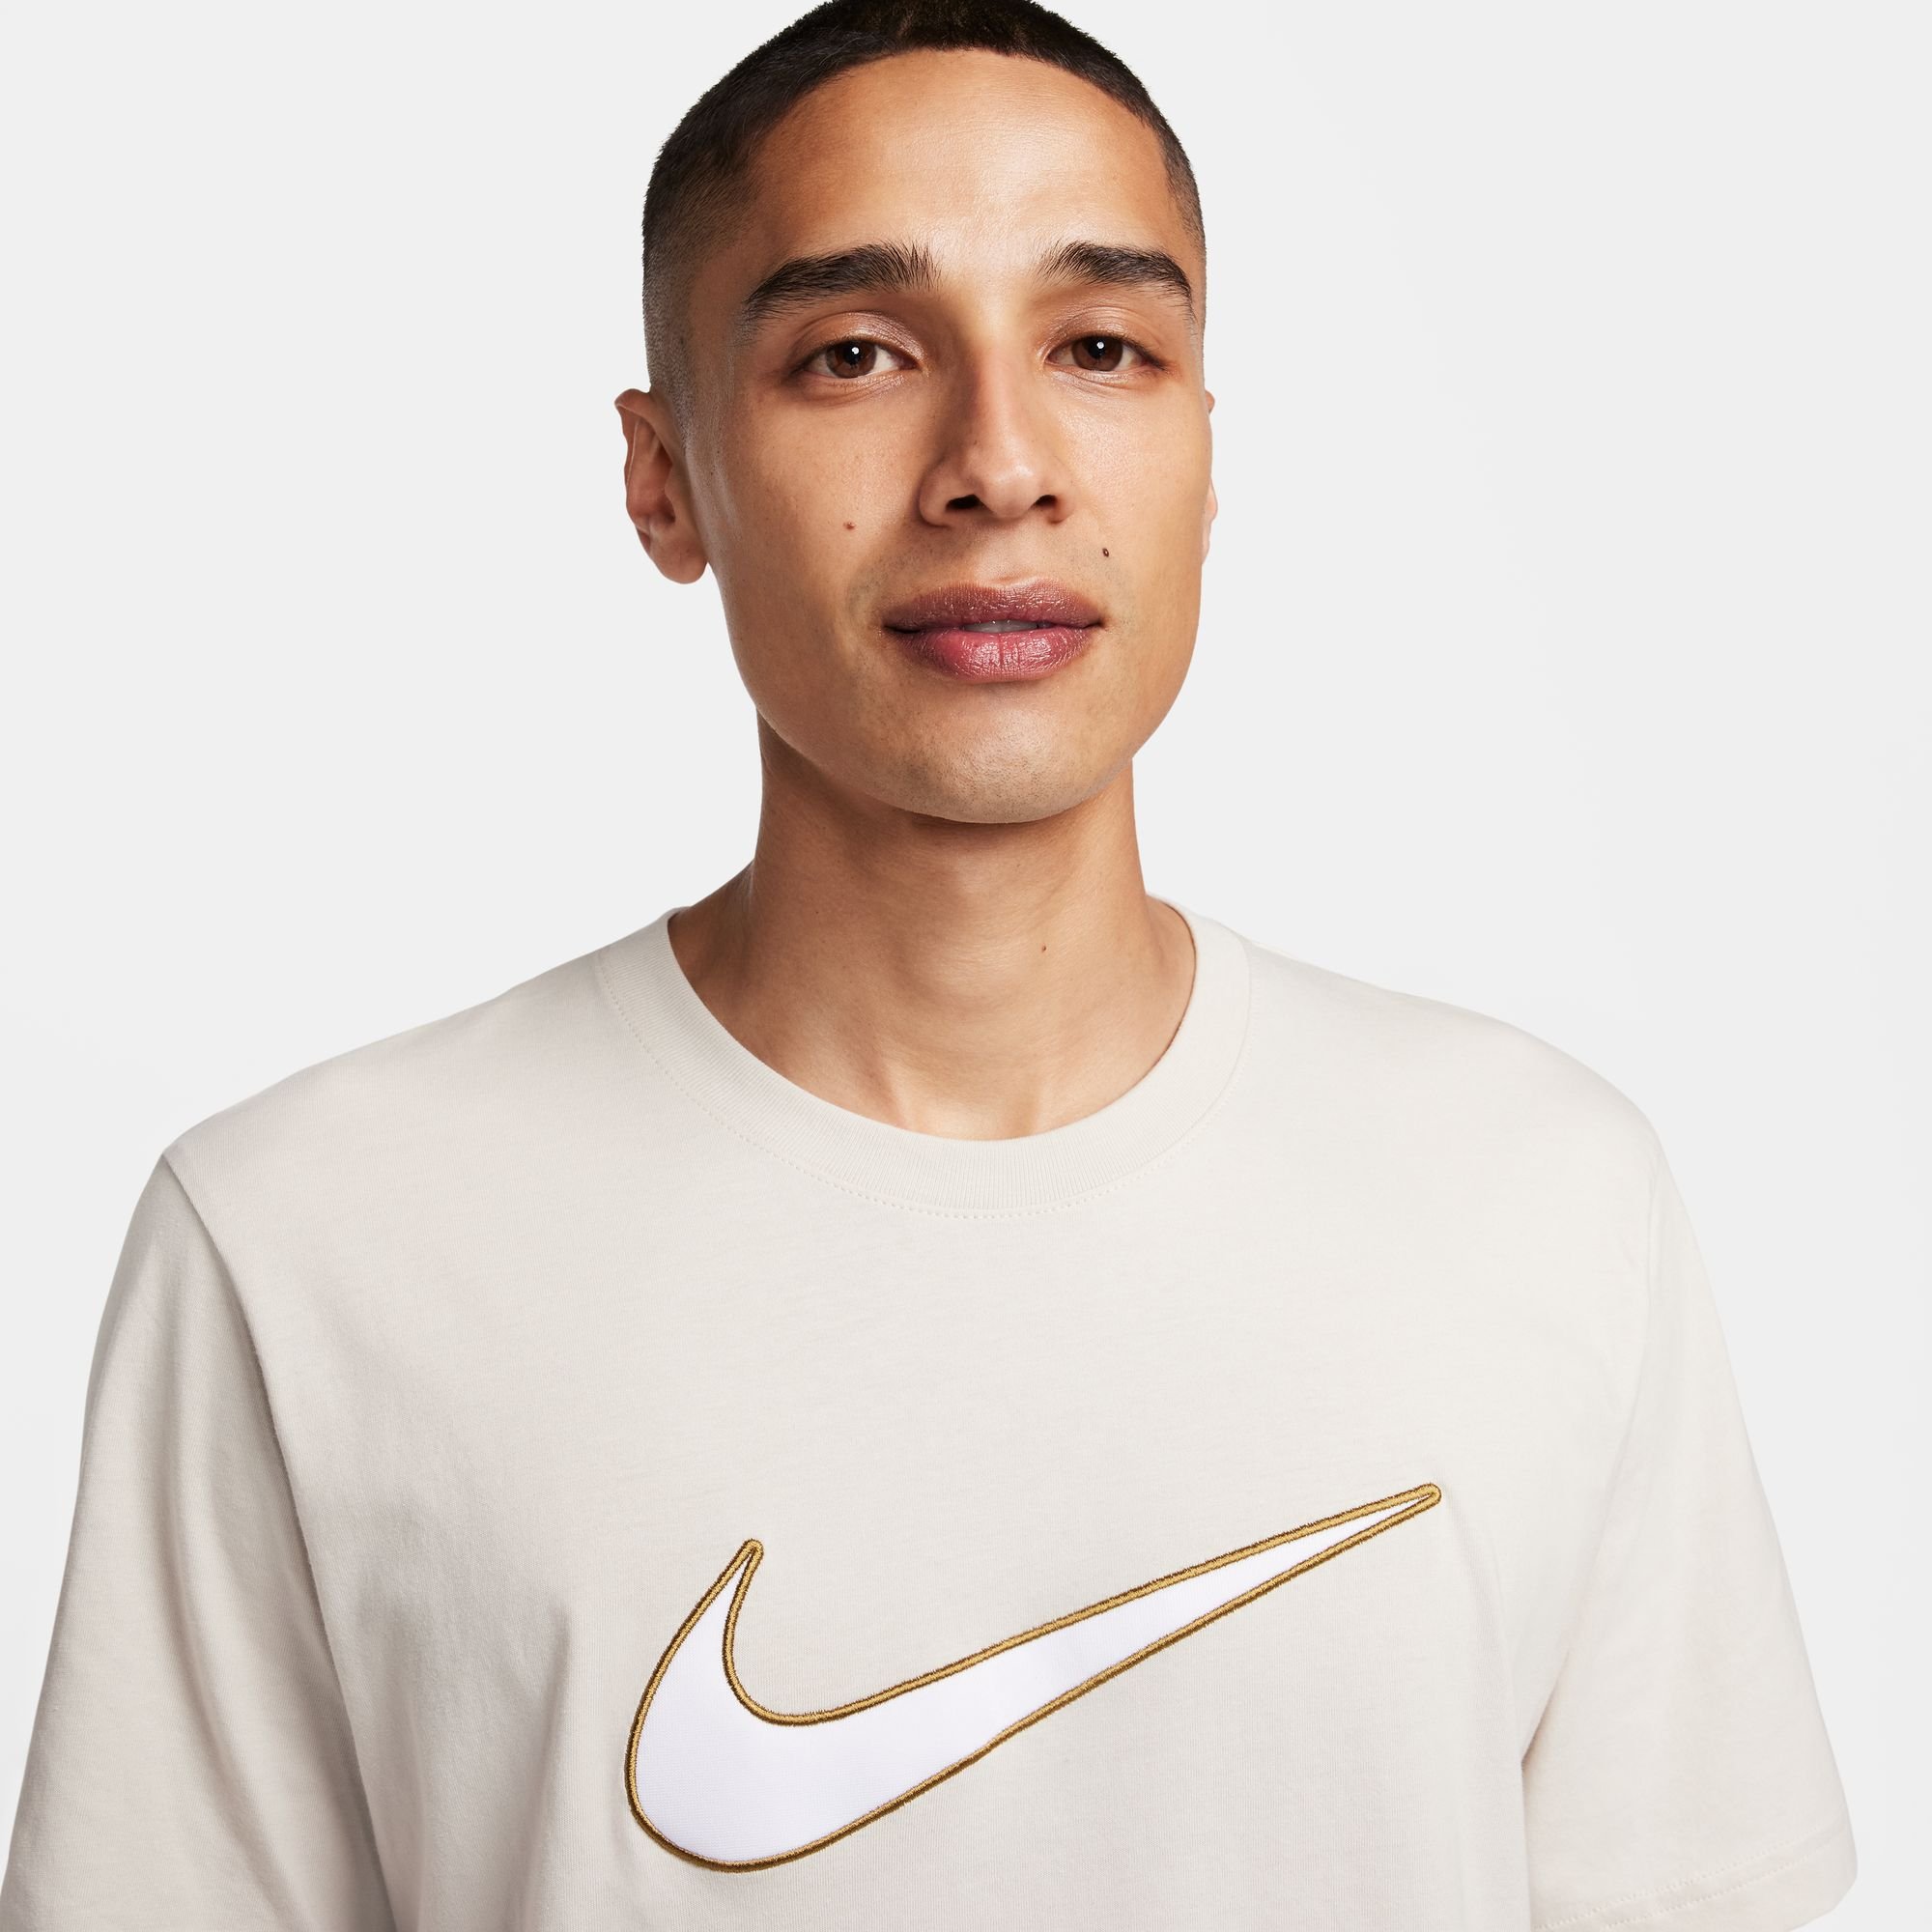 Nike Sportswear T-Shirt Orewood Brown White